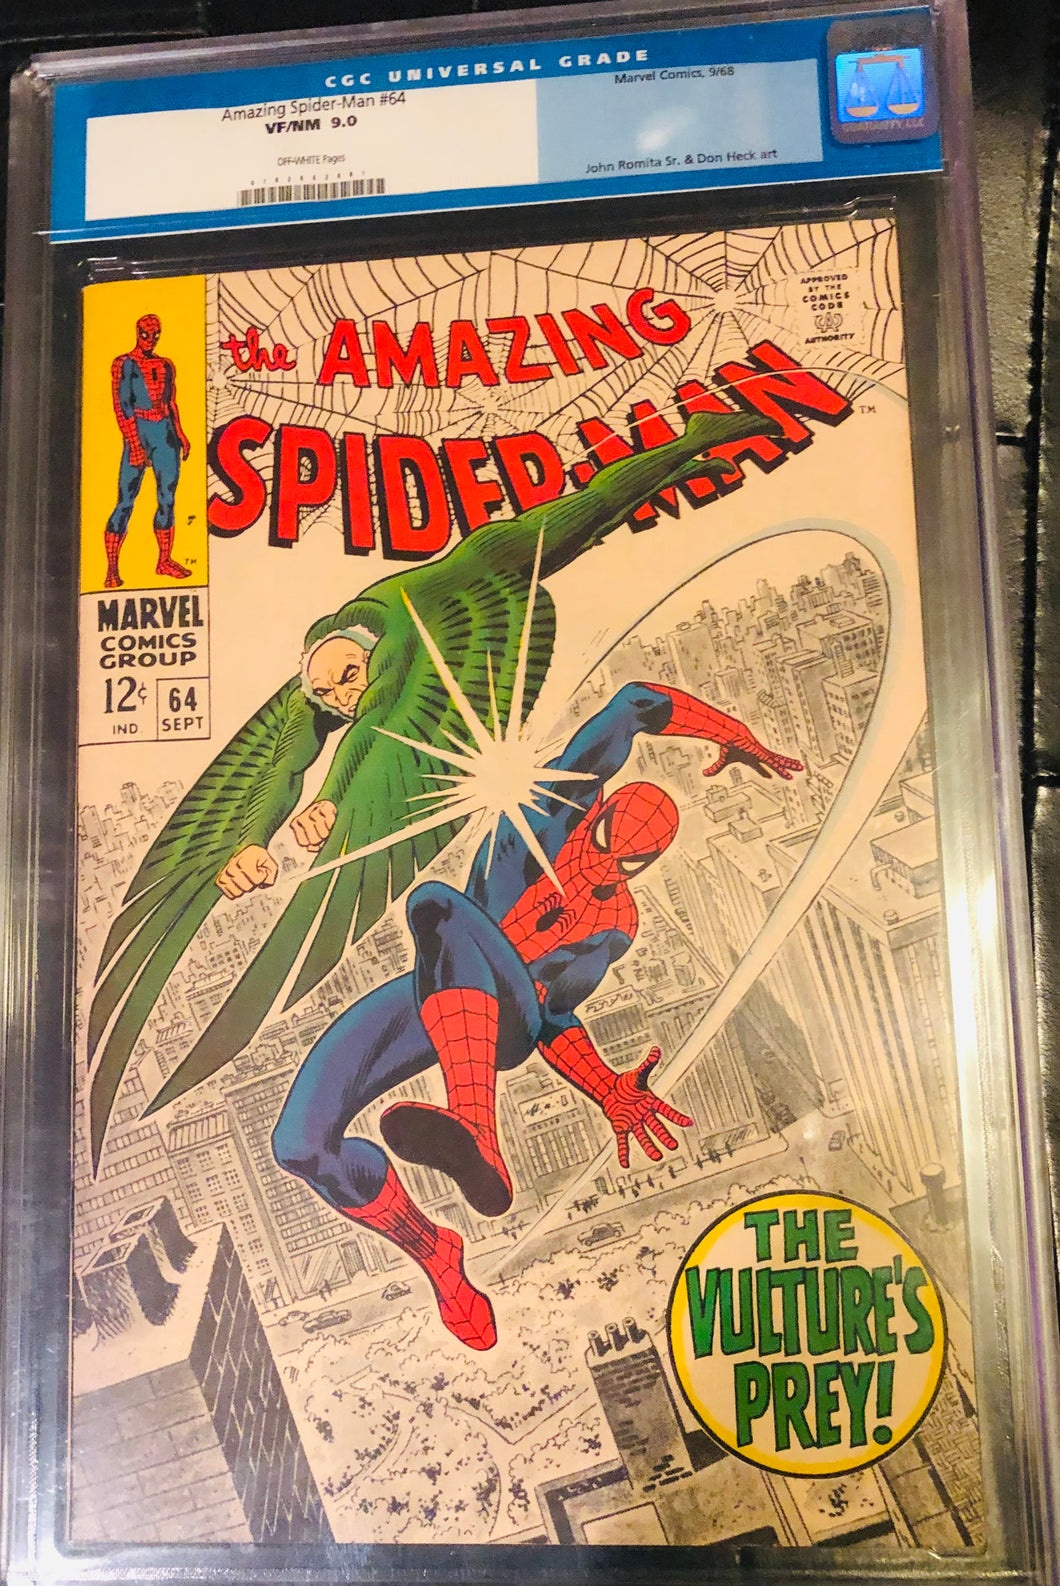 1968 Amazing Spider-Man CGC 9.0 #64